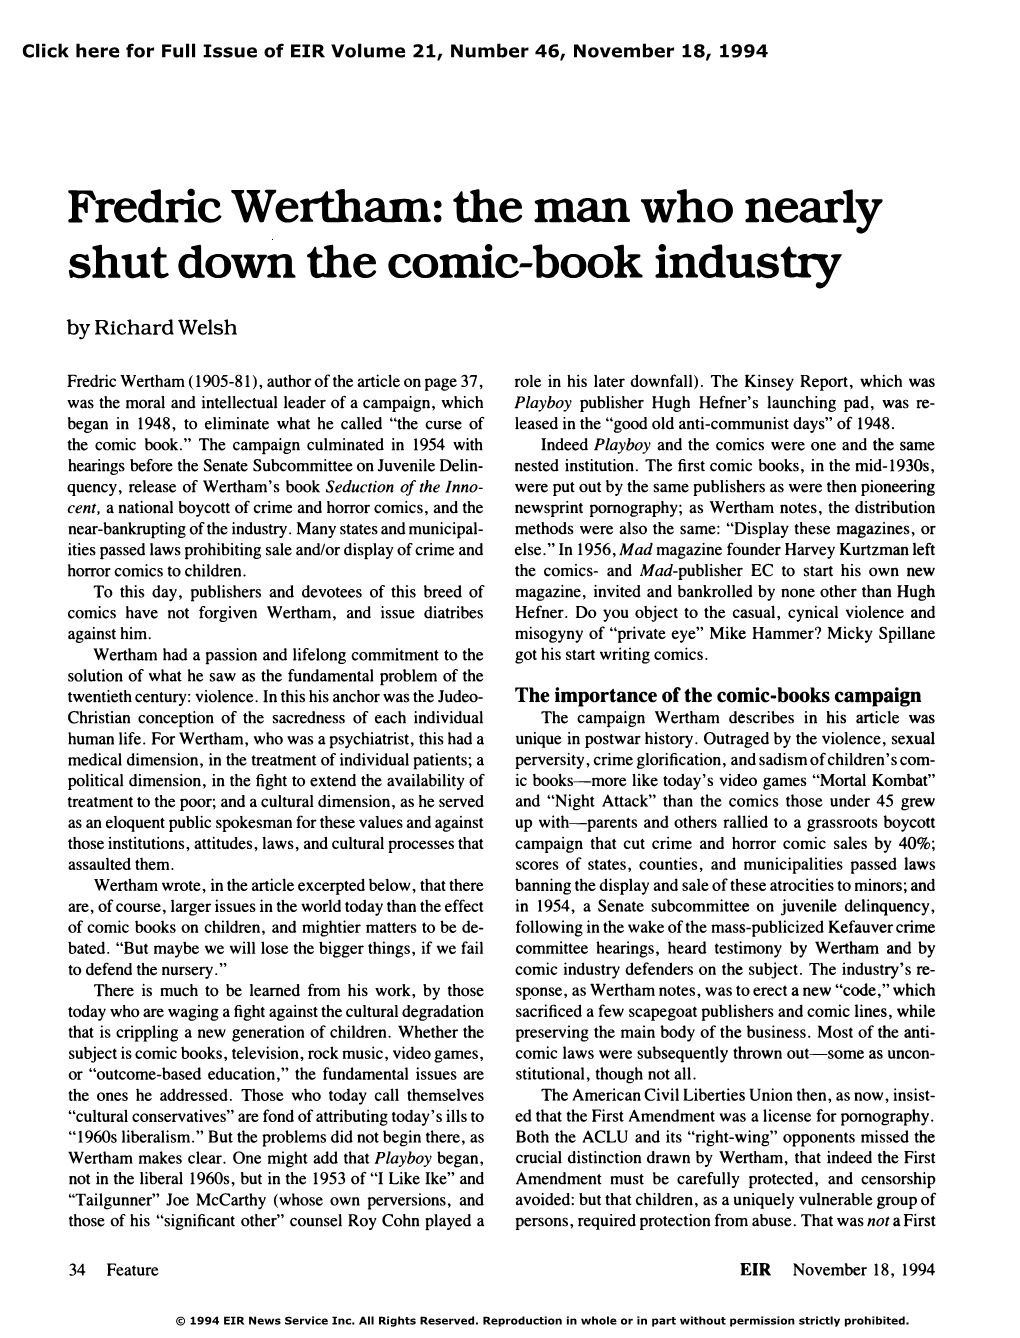 Fredric Wertham: the Man Who Nearly Shut Down the Comic-Book